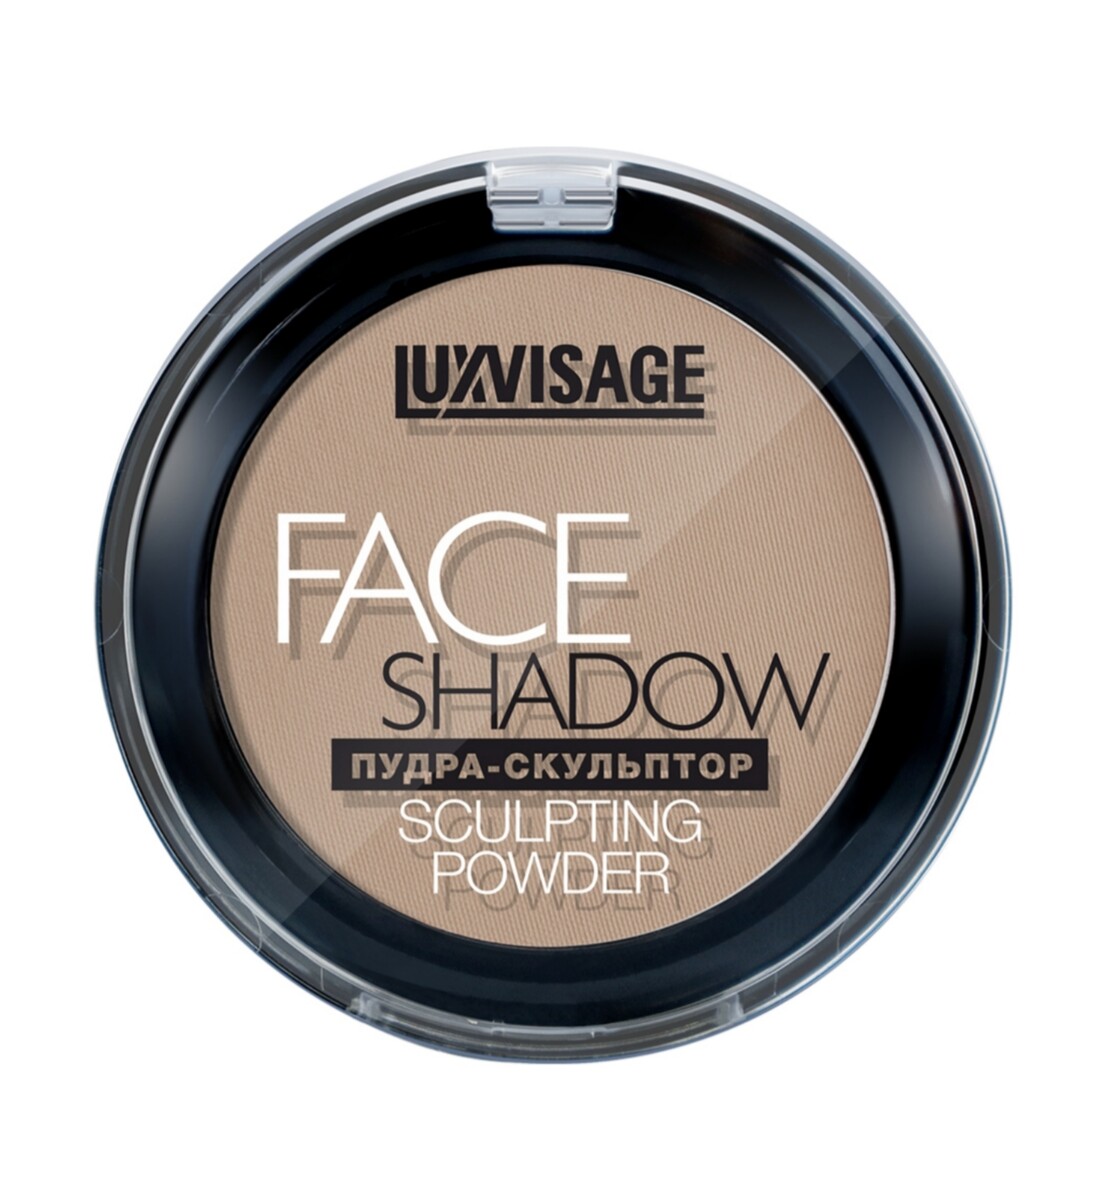 Luxvisage пудра-скульптор luxvisage face shadow, тон 10 warm beige кисть косметическая luxvisage 5 для